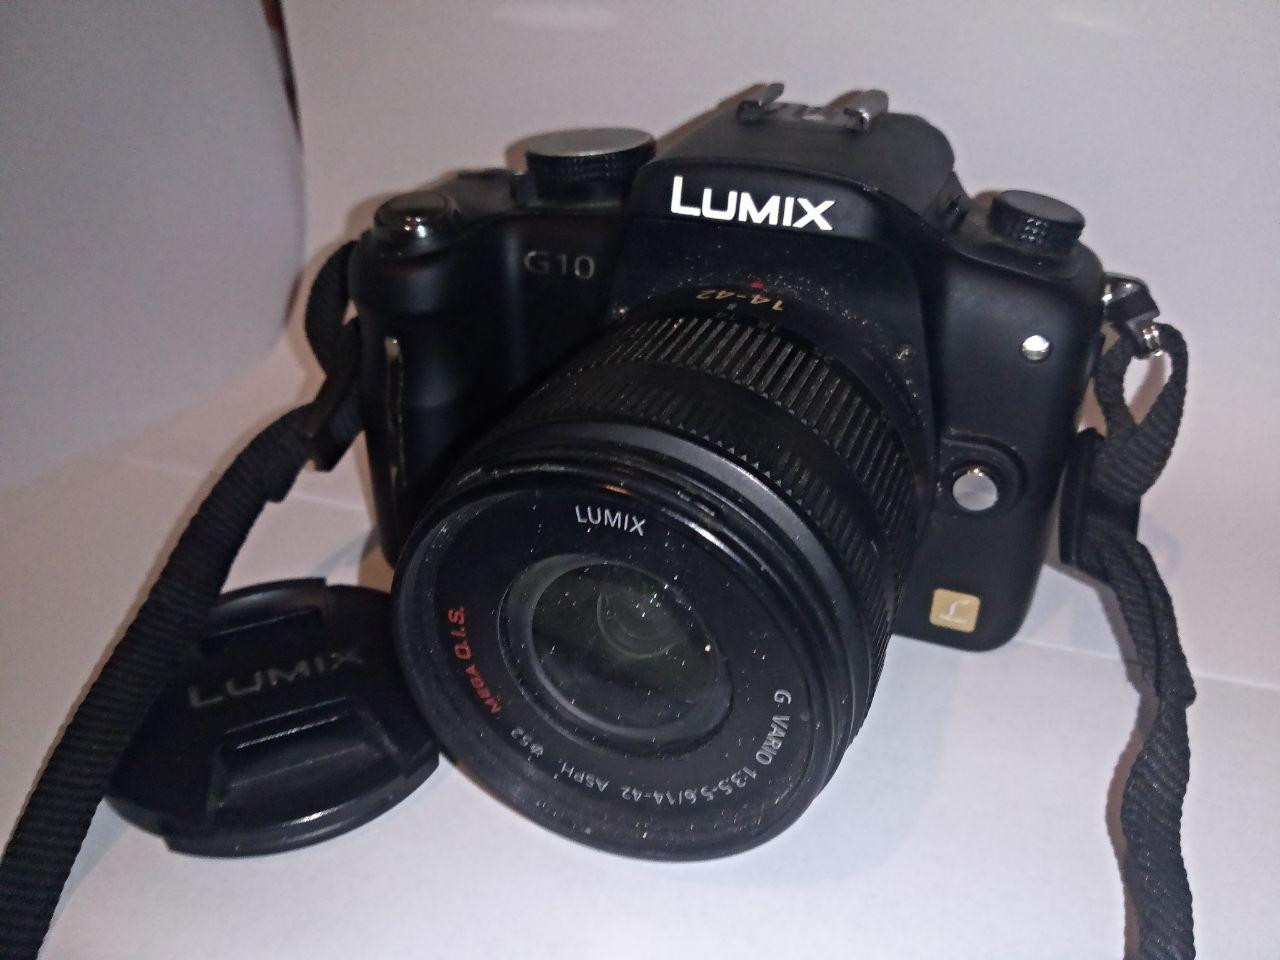 Camara profesional Panasonic lumix g10